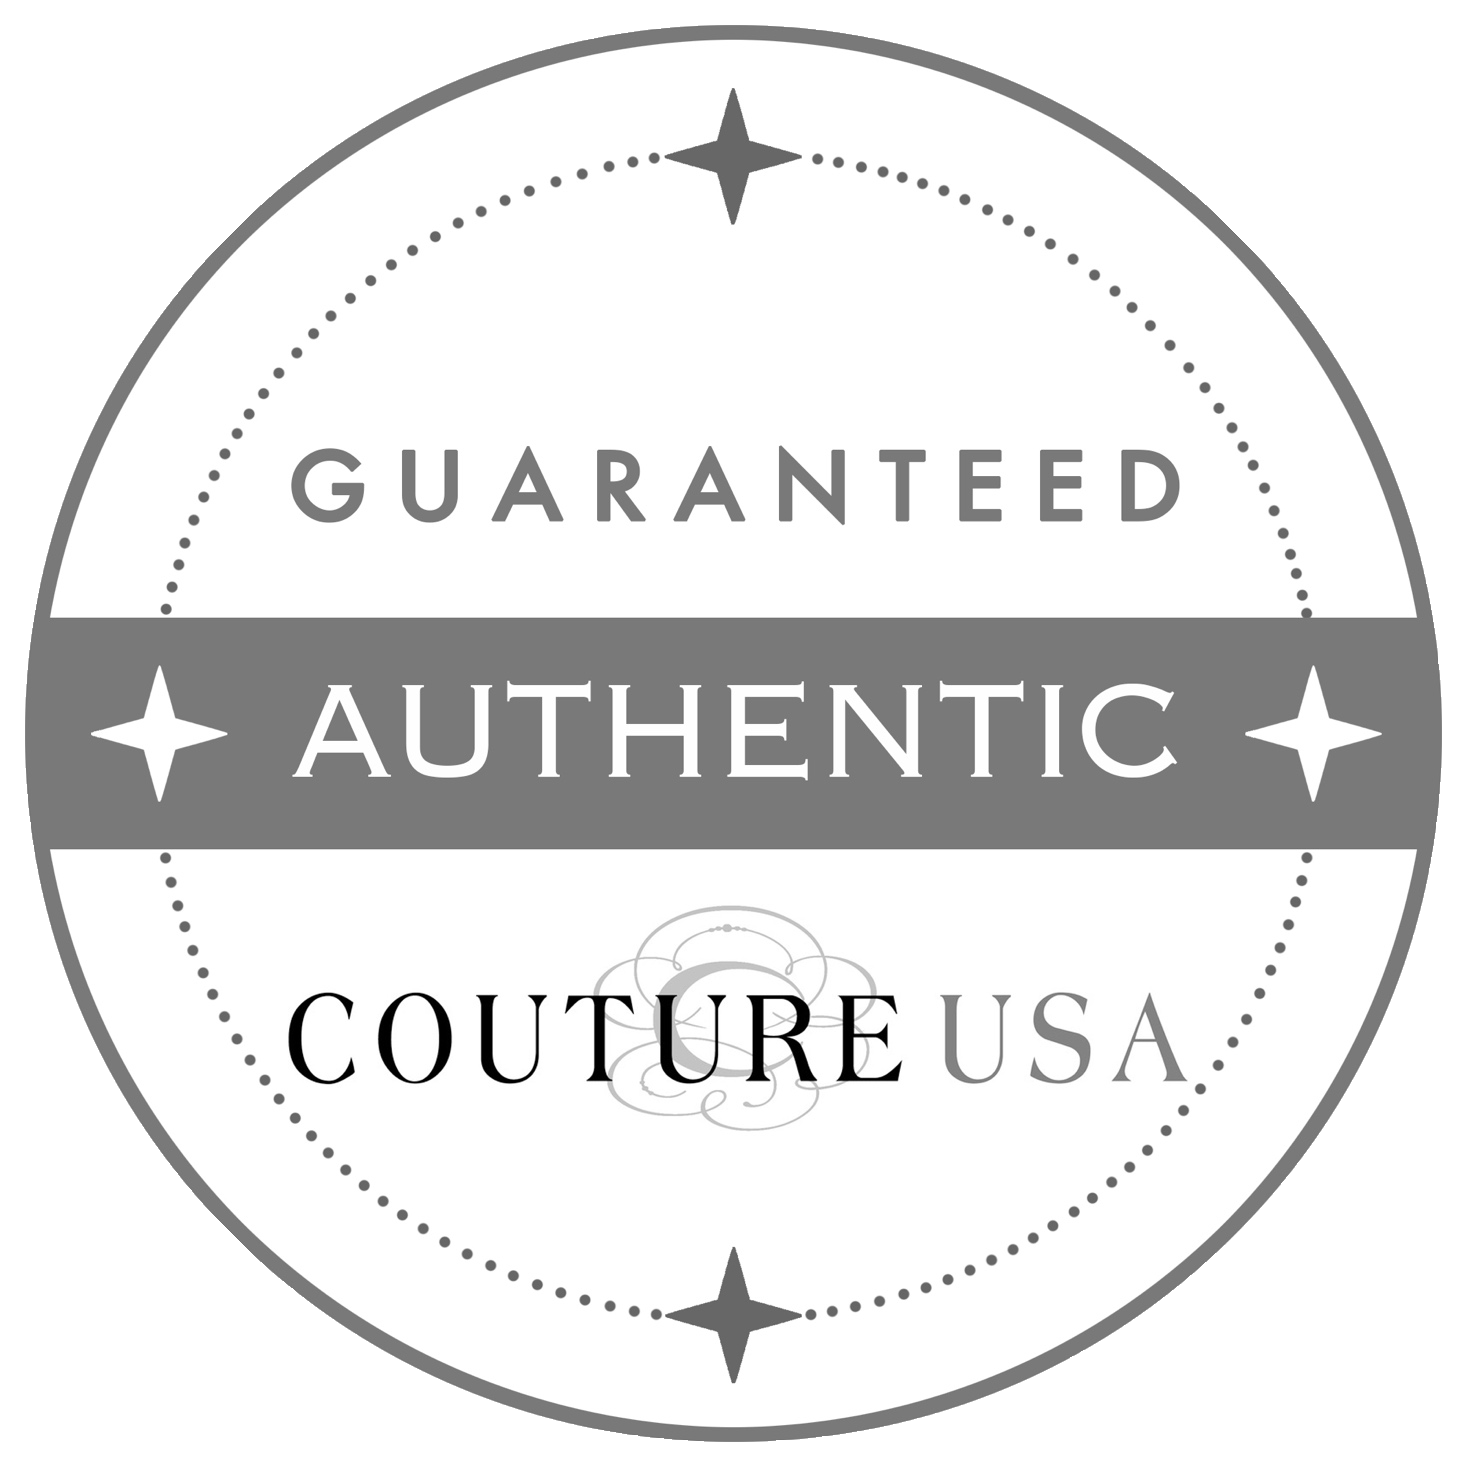 About Couture USA - Designer Resale Boutique